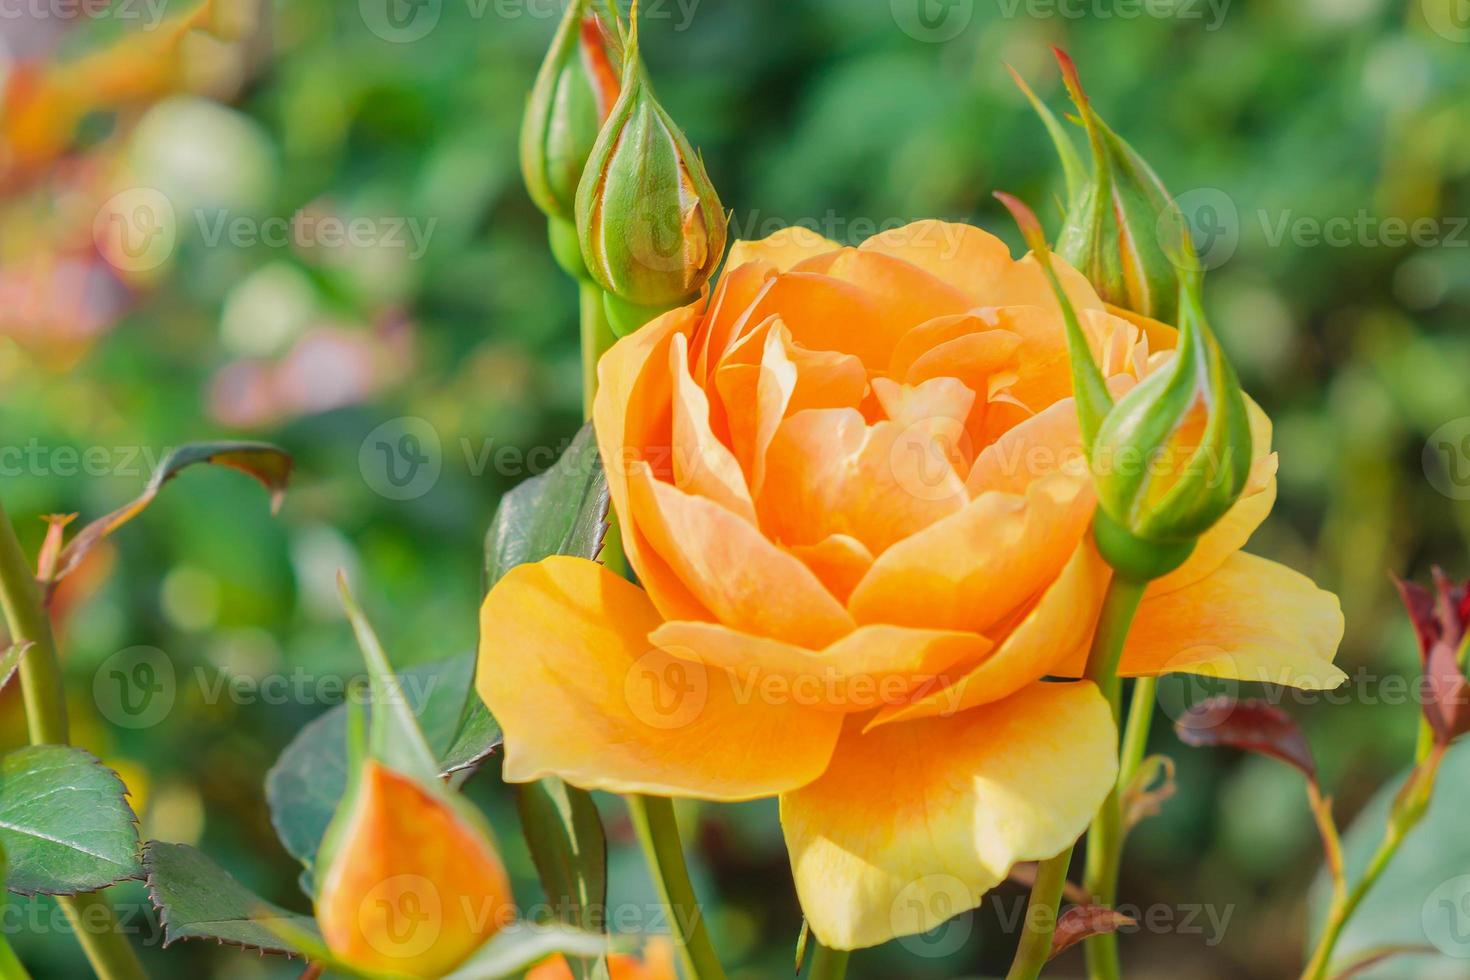 lindo jardim de rosas. close-up de flor de rosa laranja desabrochando. foco suave foto